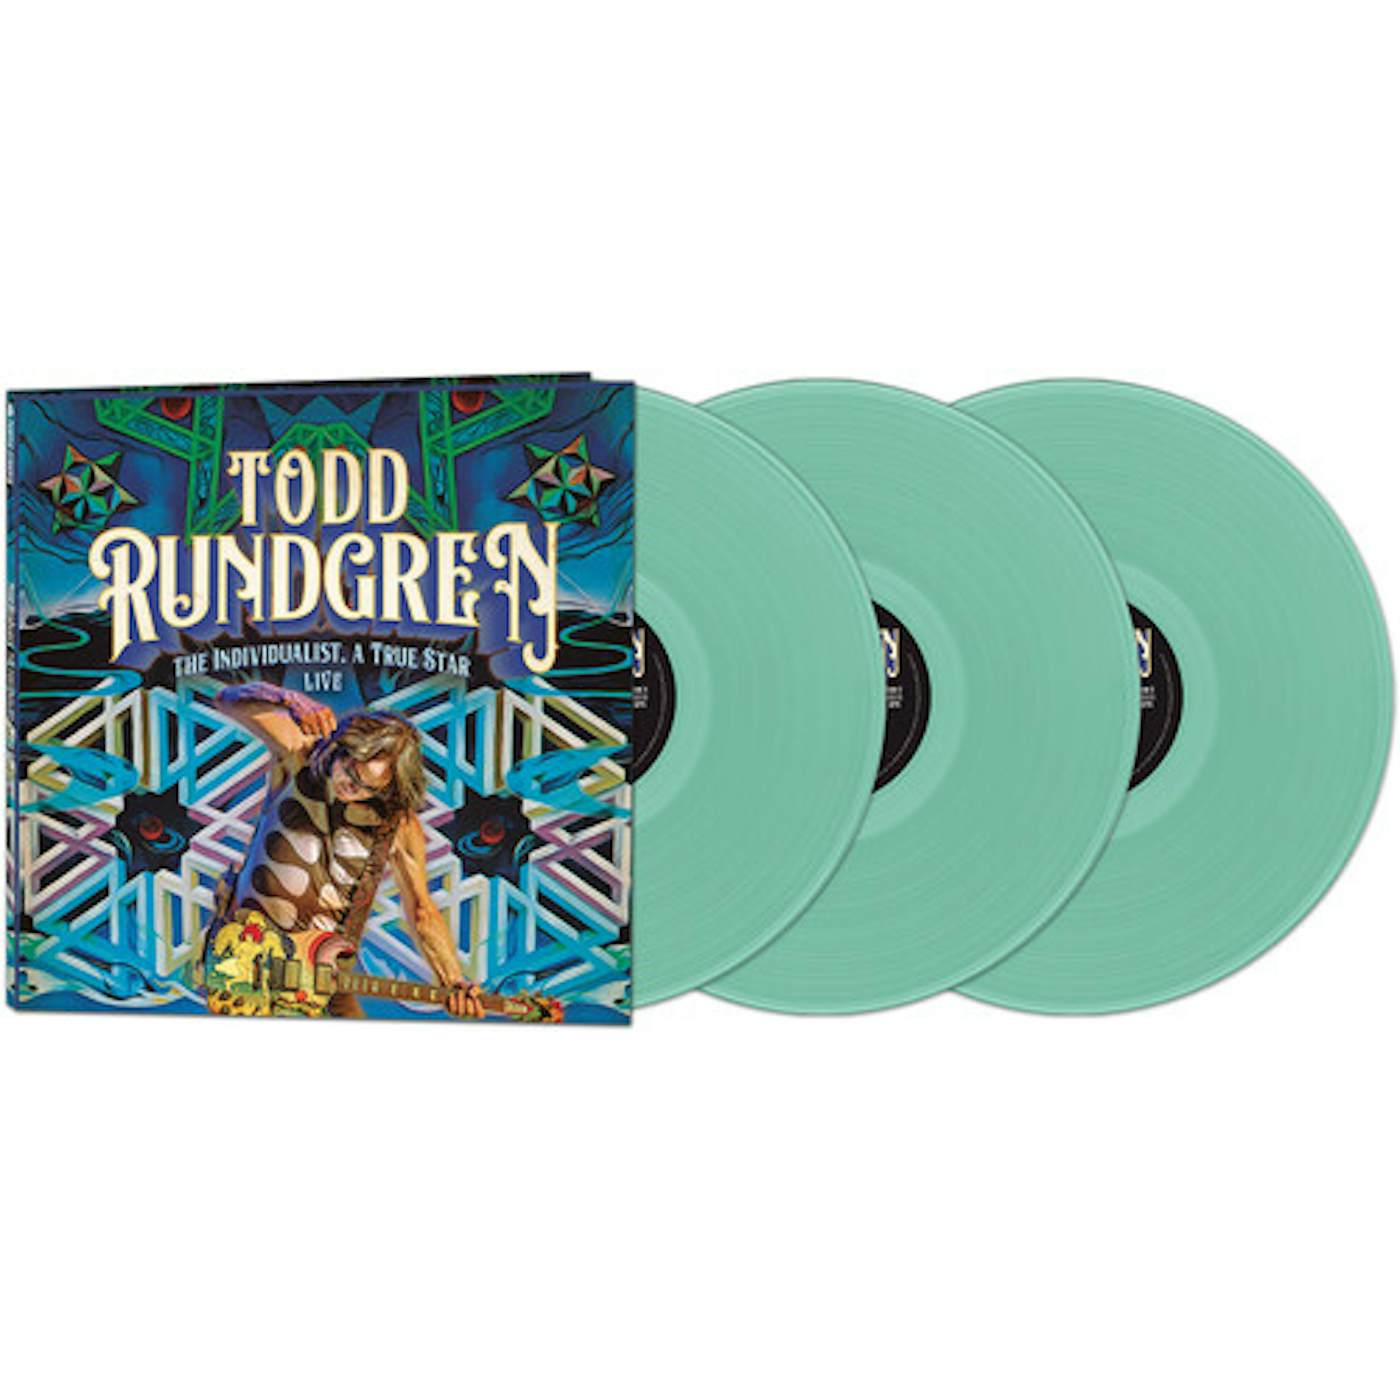 Todd Rundgren The Individualist (Coke Bottle Green) Vinyl Record